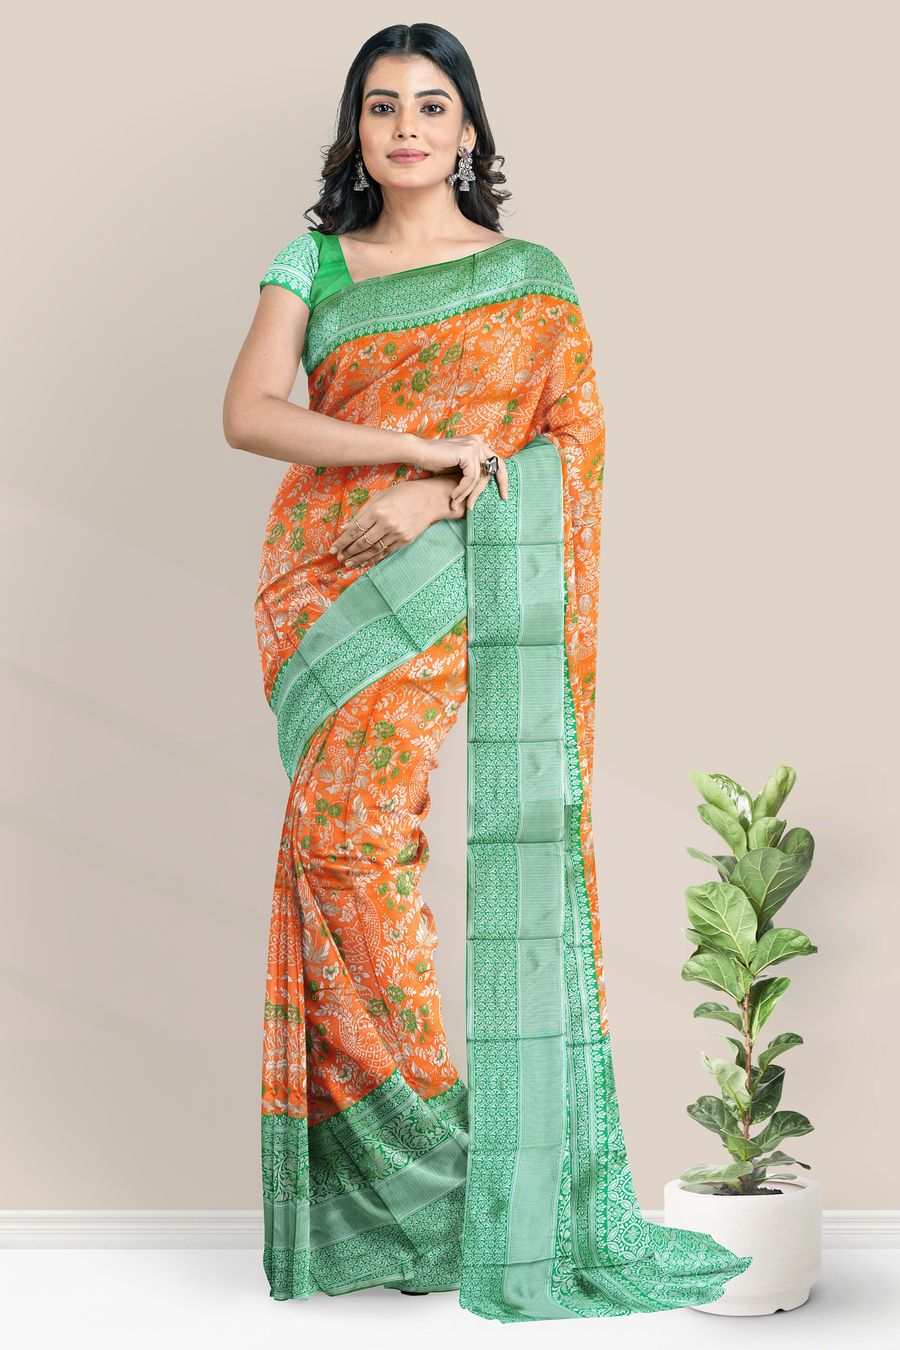 Blue And Orange Colour Kanjeevaram Silk Saree With Arani Pattu Border Butta  Contrast Pallu Along With Blouse | Designr.me